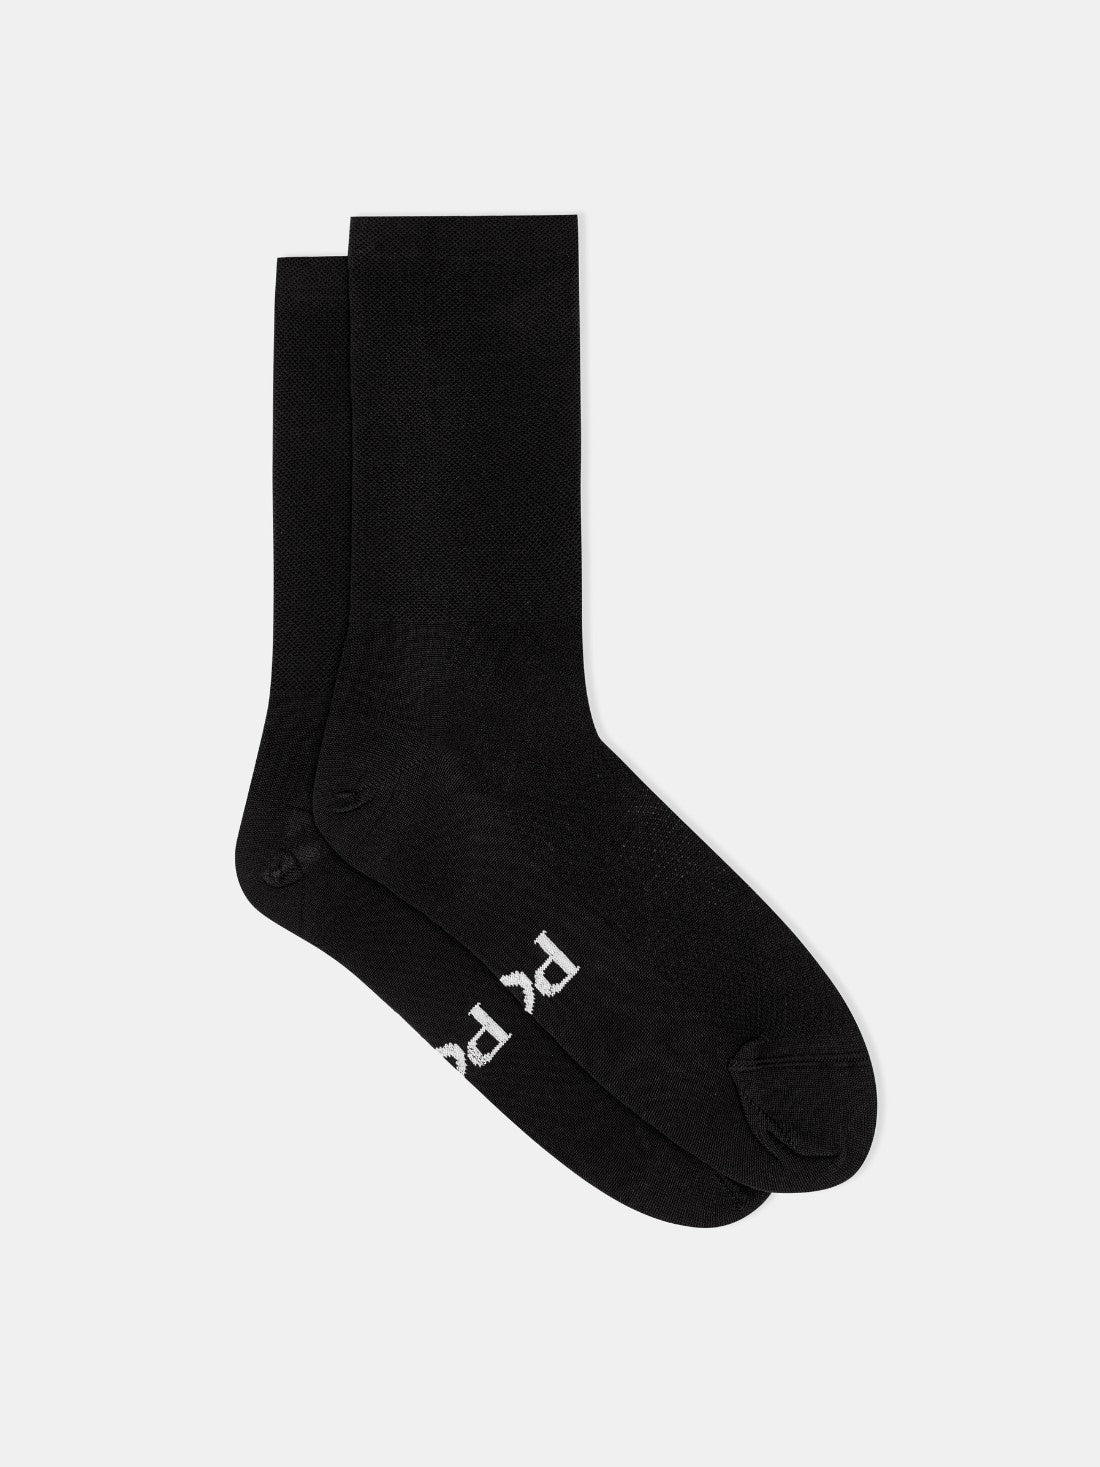 Permanent Black Socks